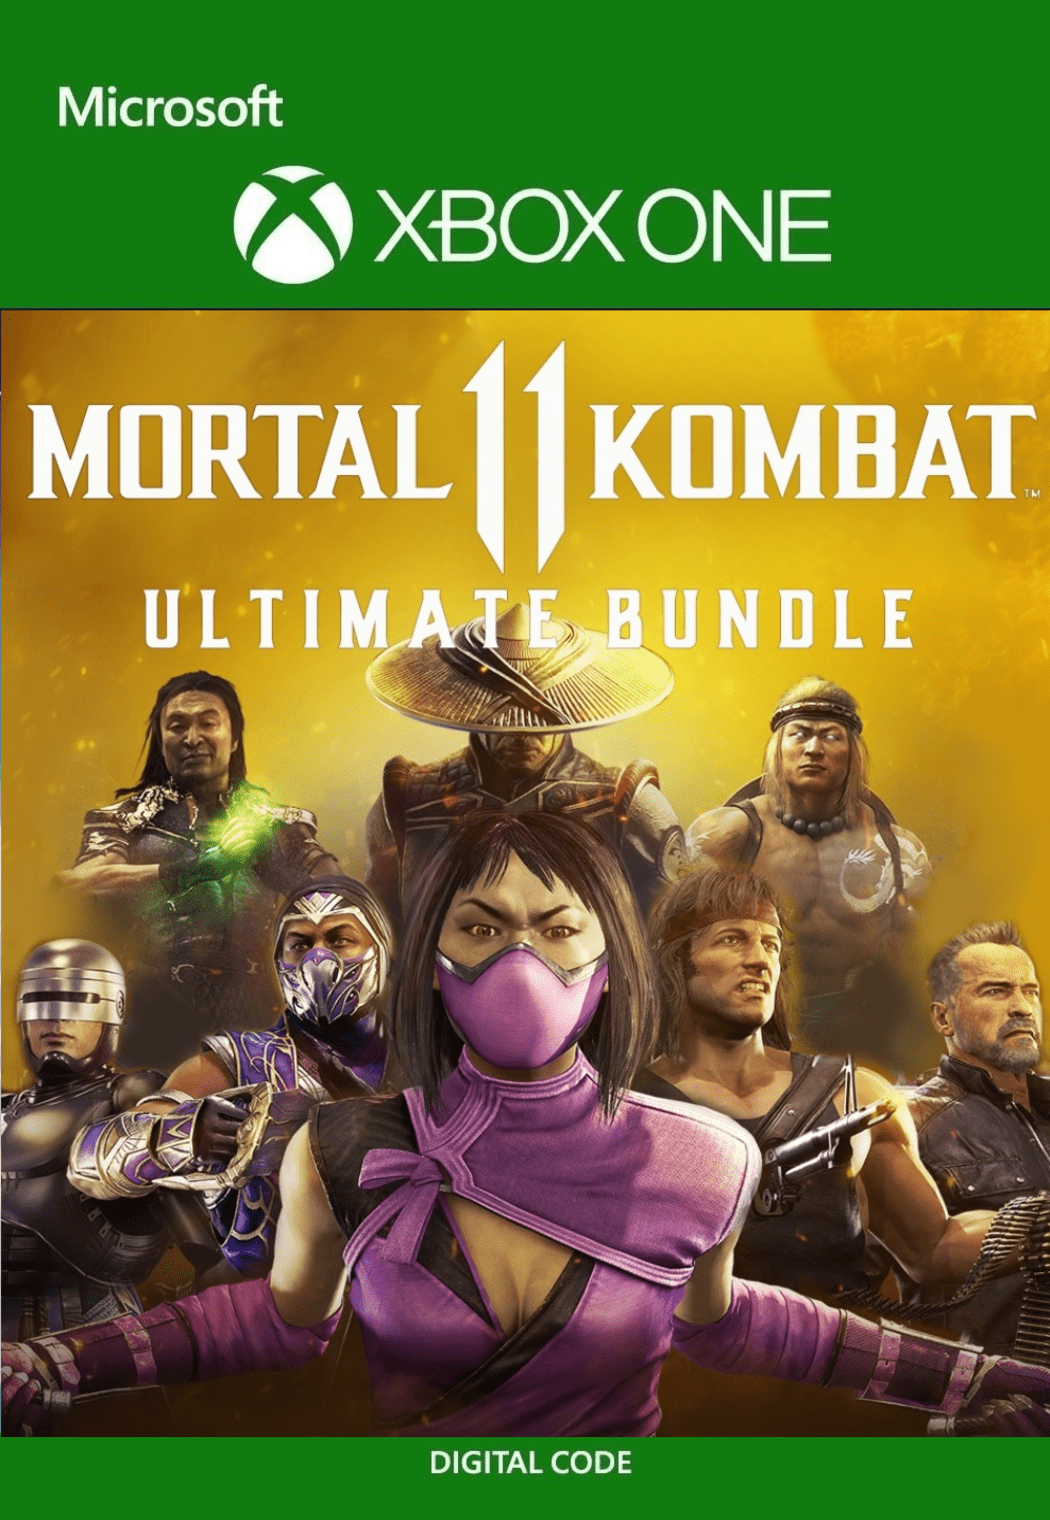 Download Xbox Mortal Kombat X Kombat Pack 1 Xbox One Digital Code